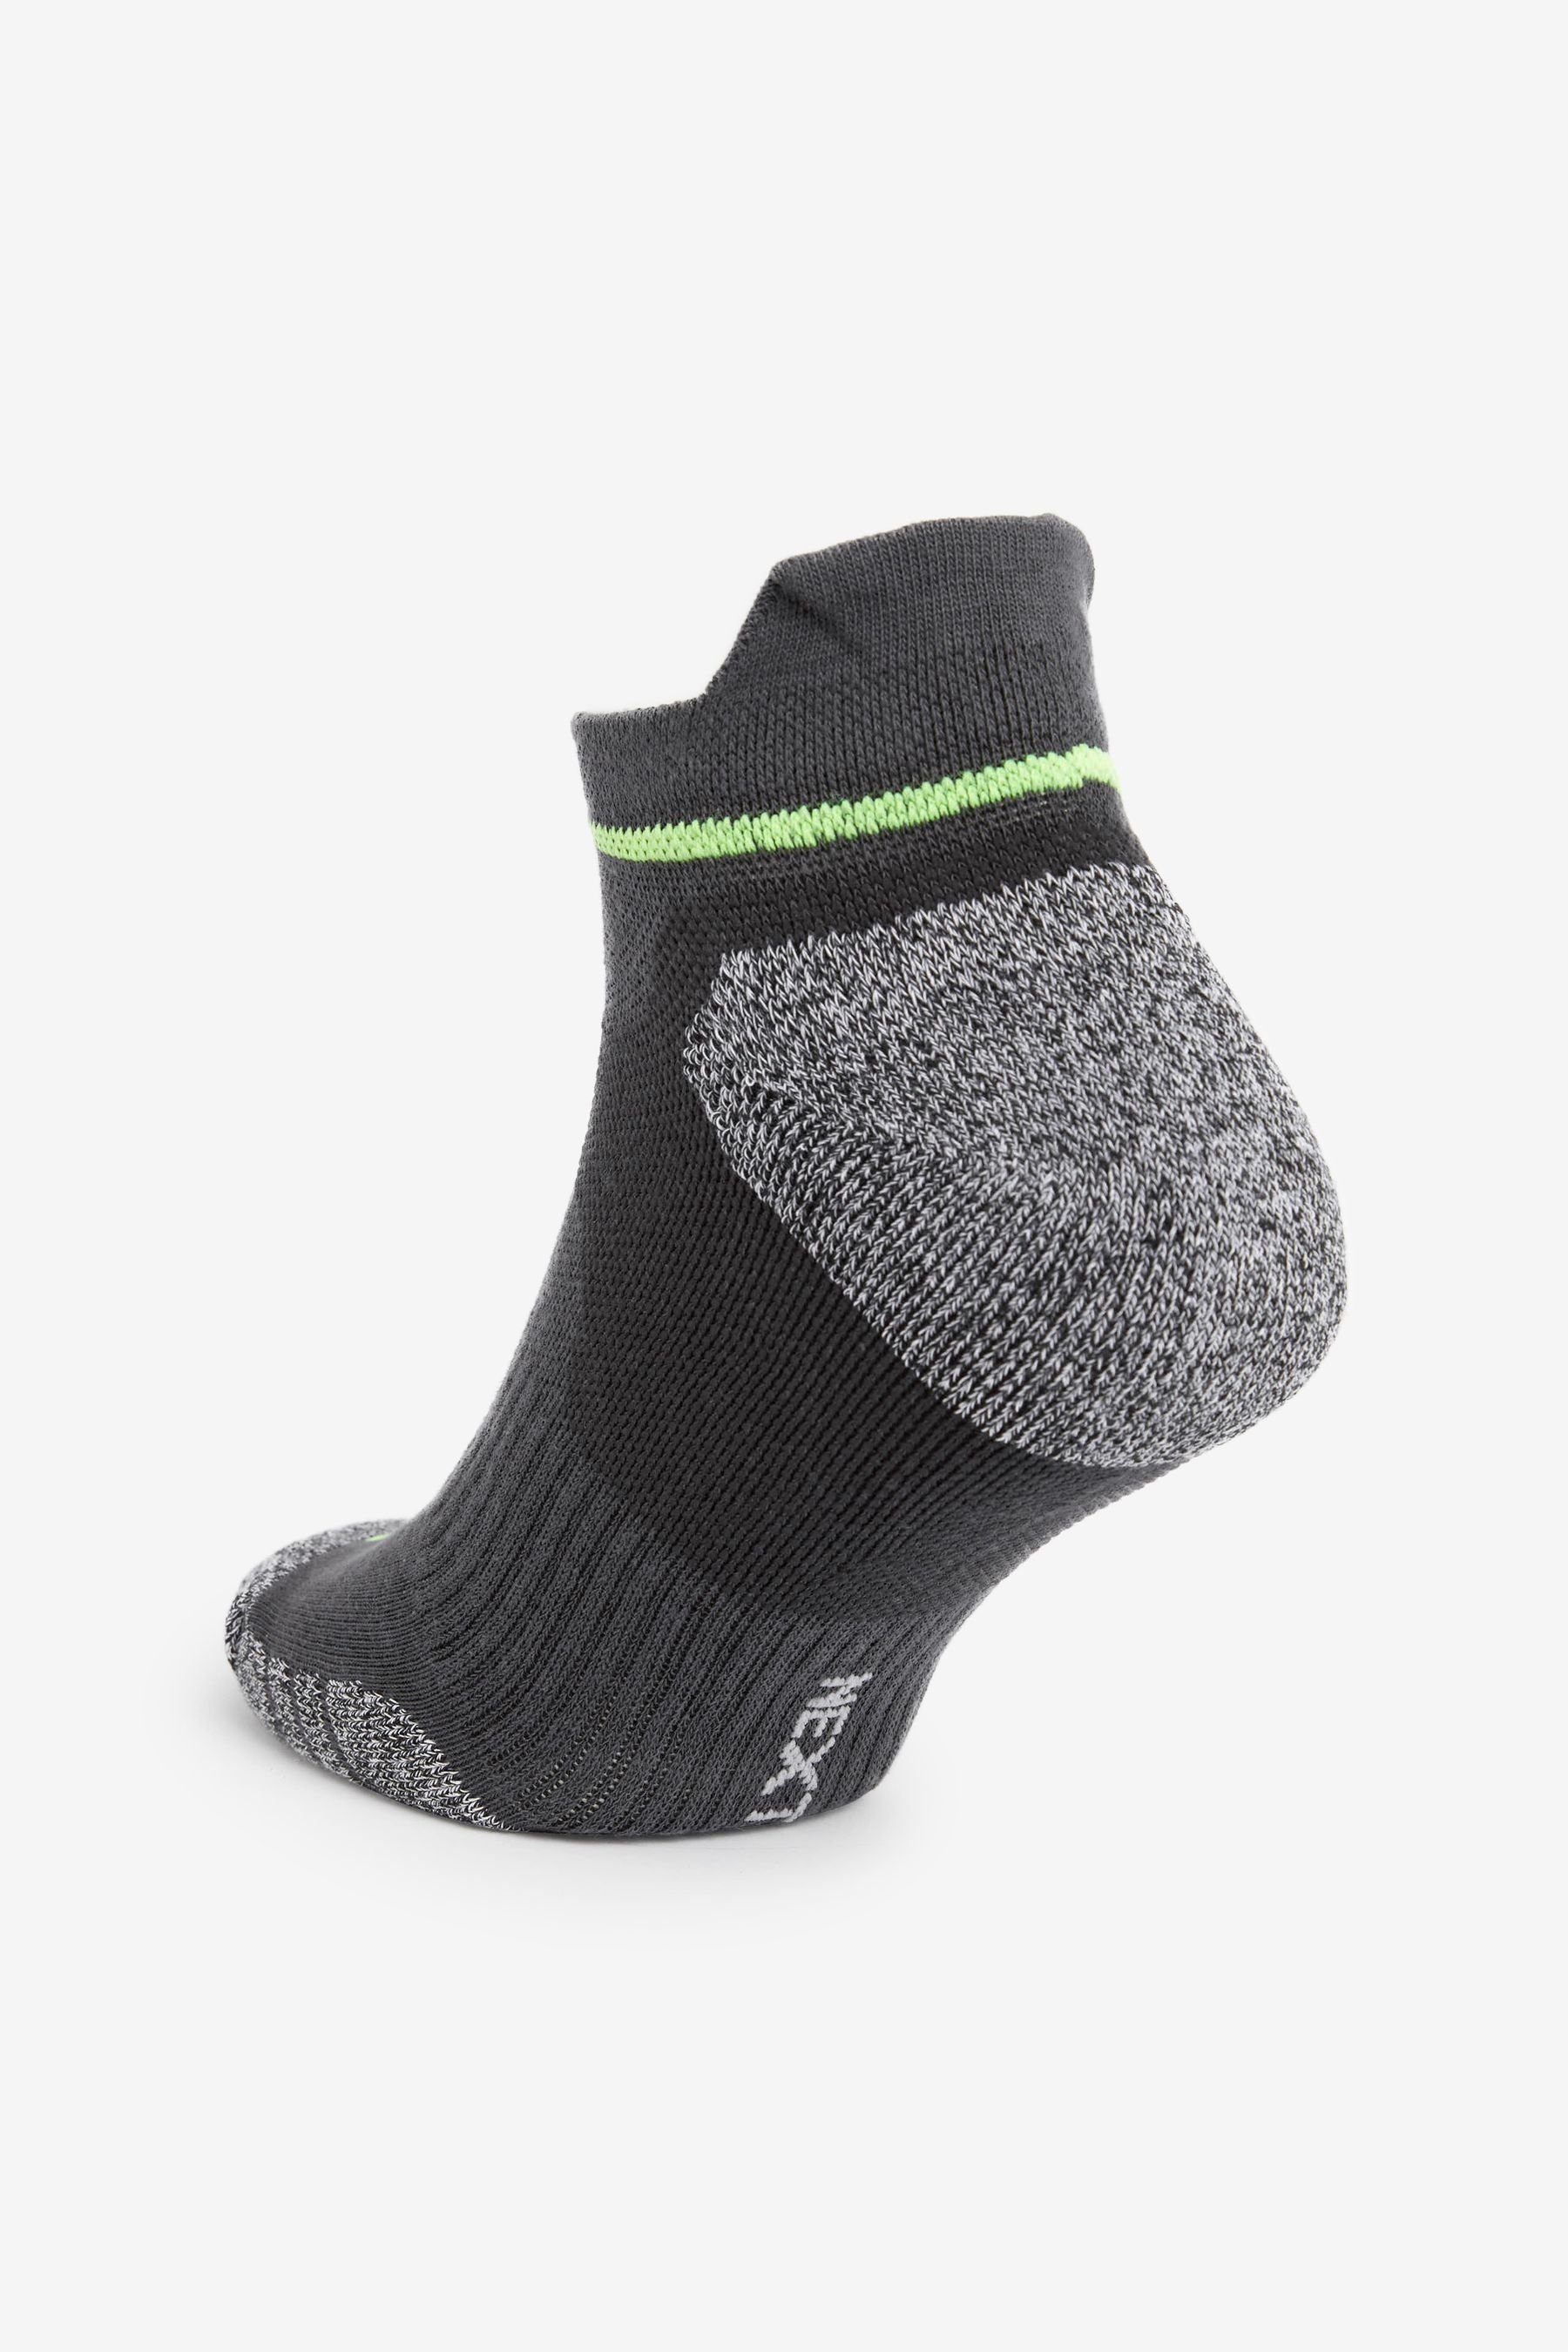 (4-Paar) Socken Next Next Füßlinge im Active Black/White Gepolsterte 4er-Pack